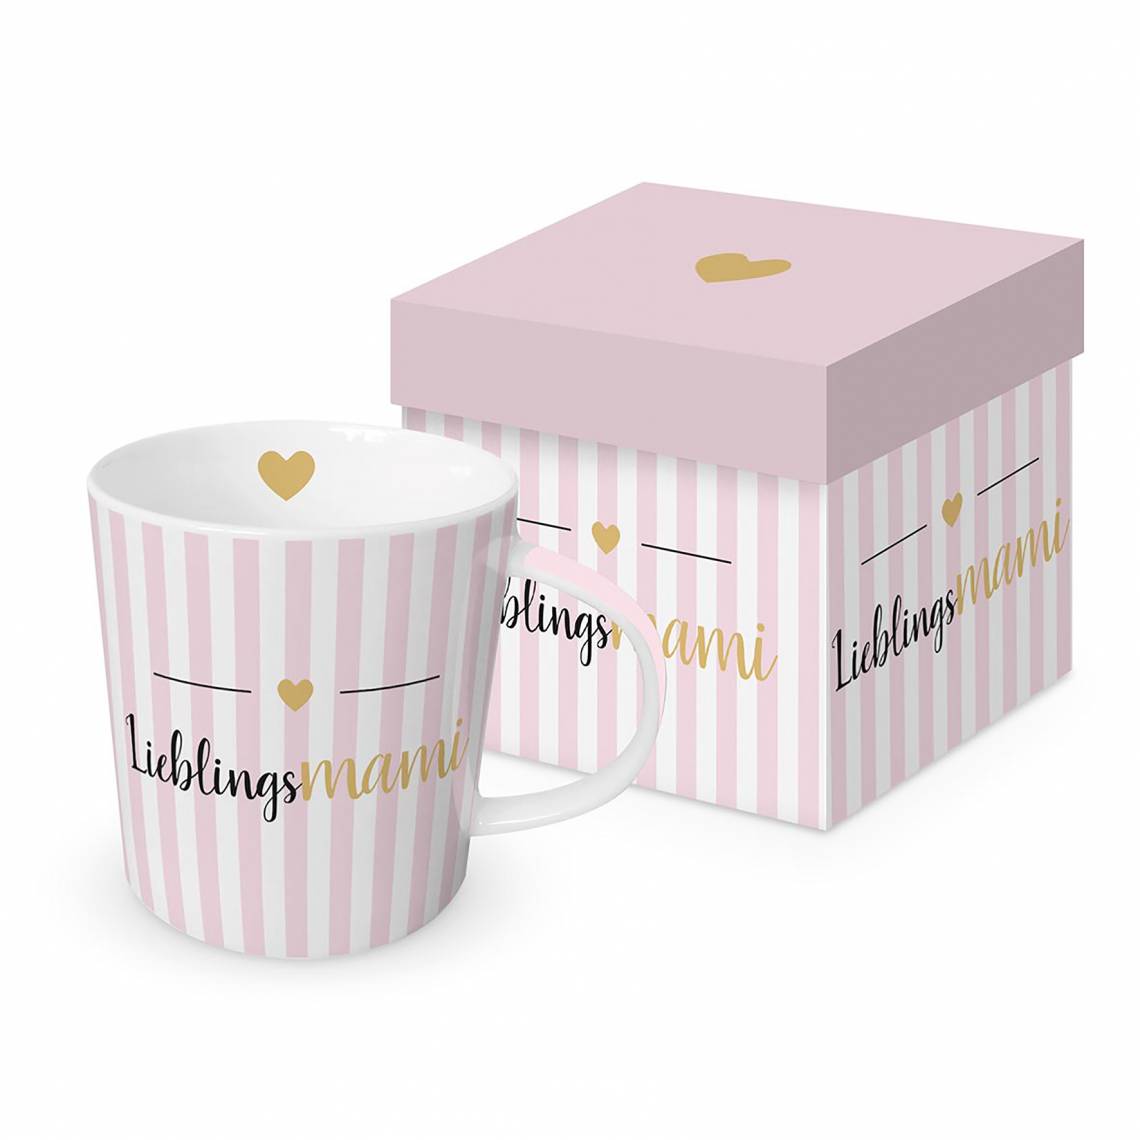 PPD 604357 Lieblingsmami Trend Mug Gift Box